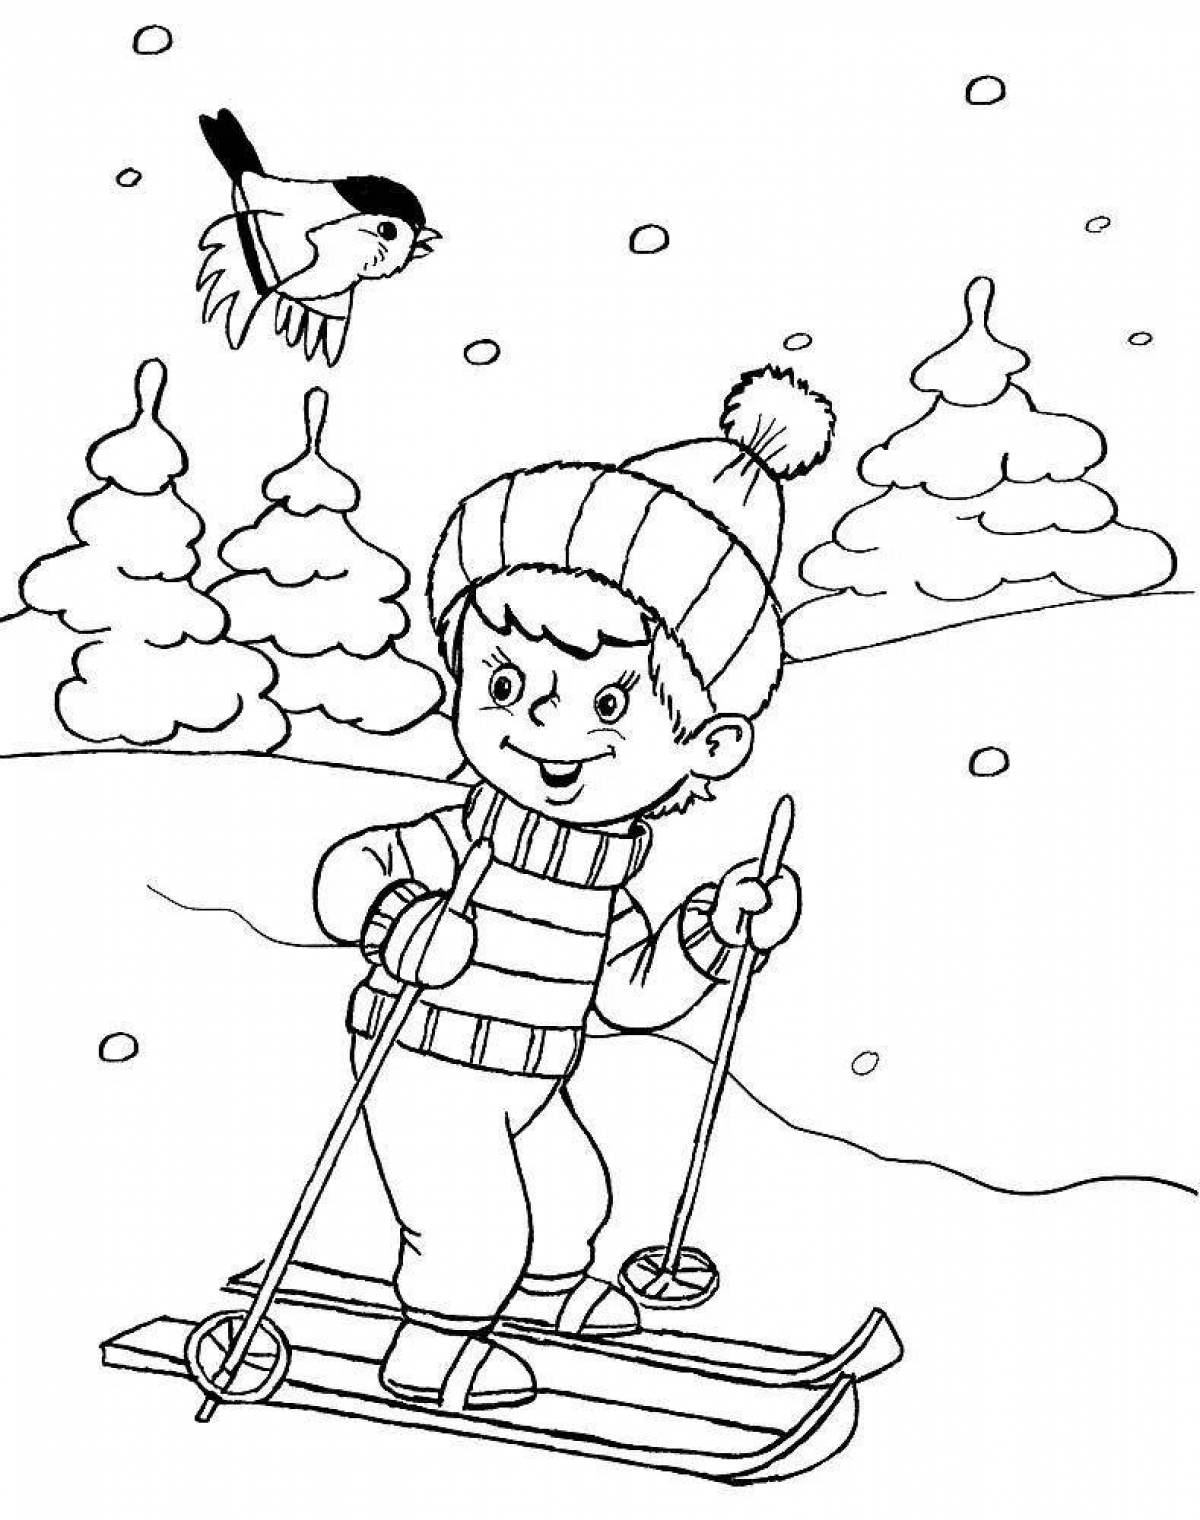 Coloring book snow scene for schoolchildren